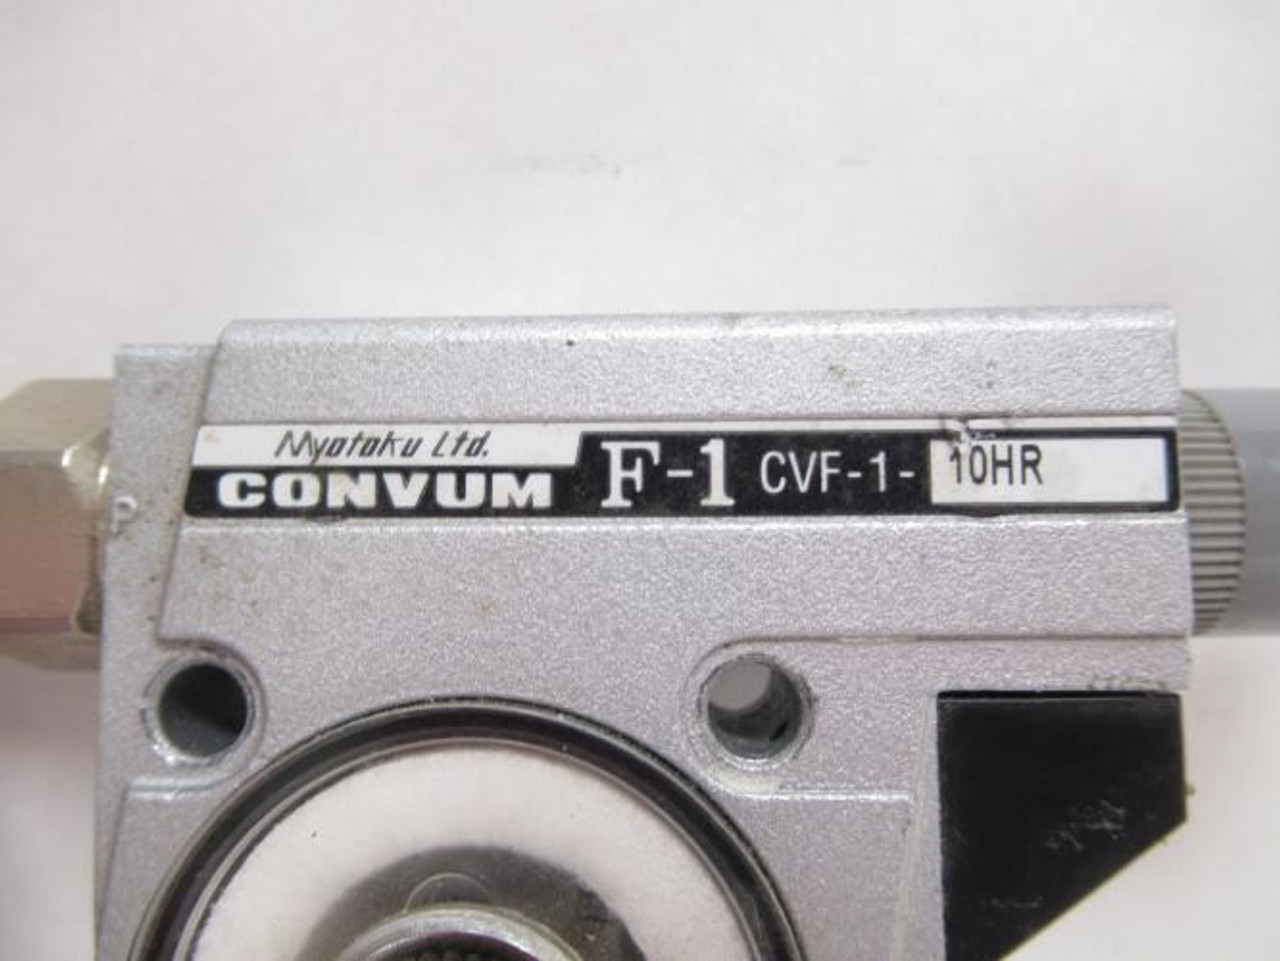 Convum CVF-1-10HR; Vacuum Sensor With 1/4" PTC Elbows